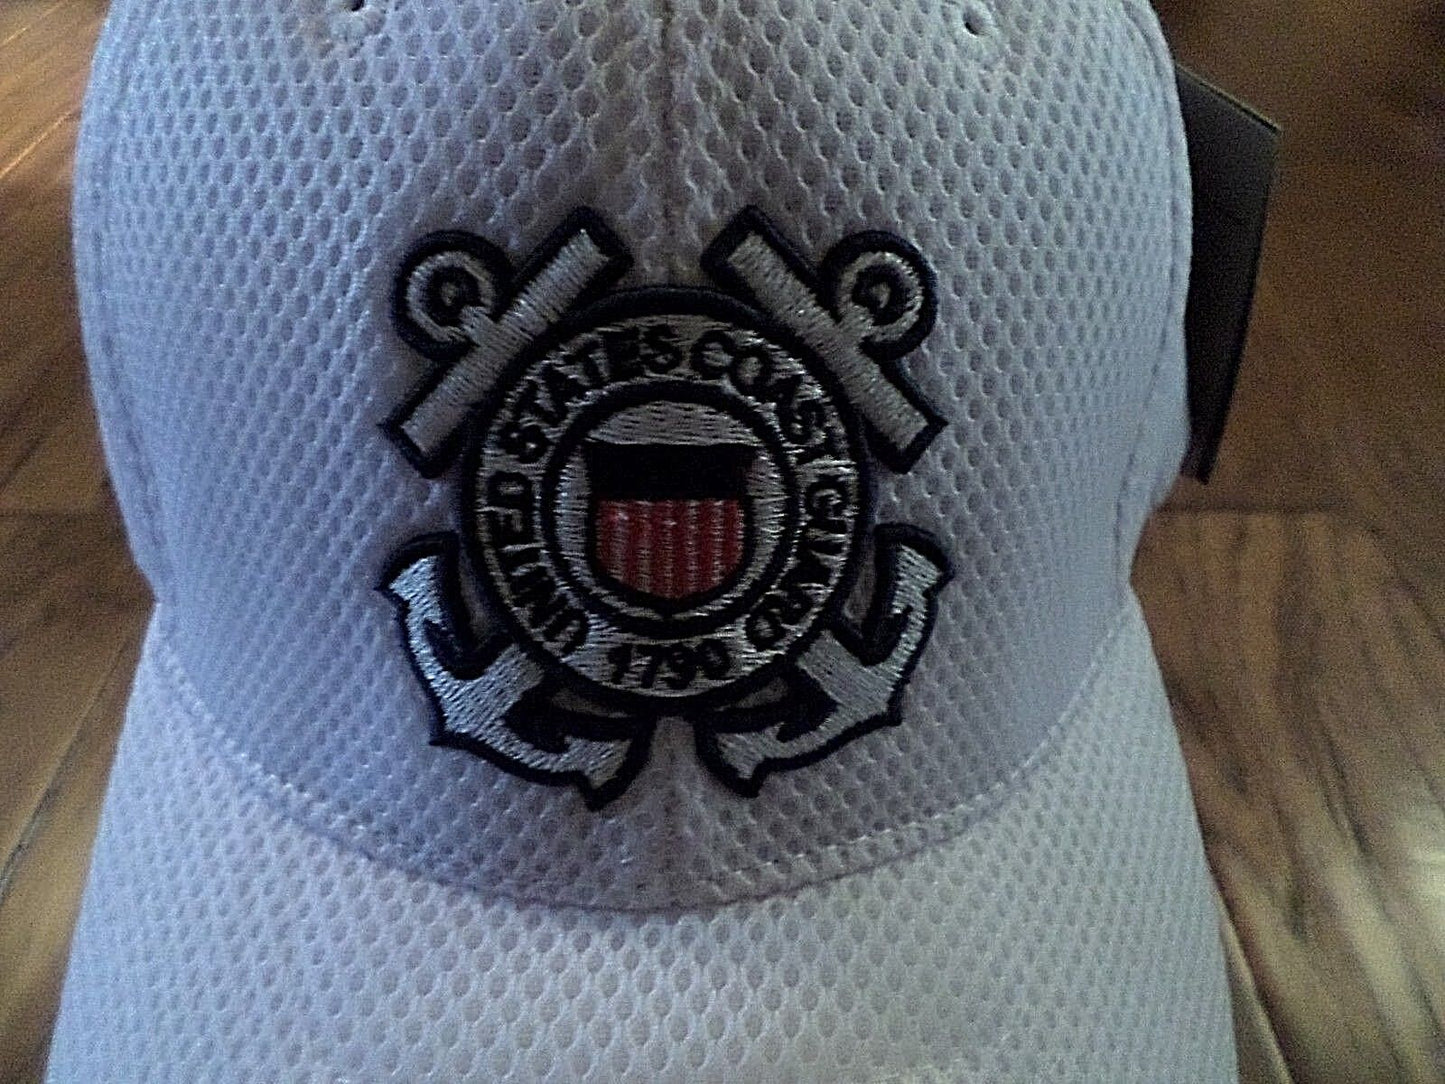 New U.S Coast Guard Hat Air Mesh 3-D Embroidered CG White Baseball Cap